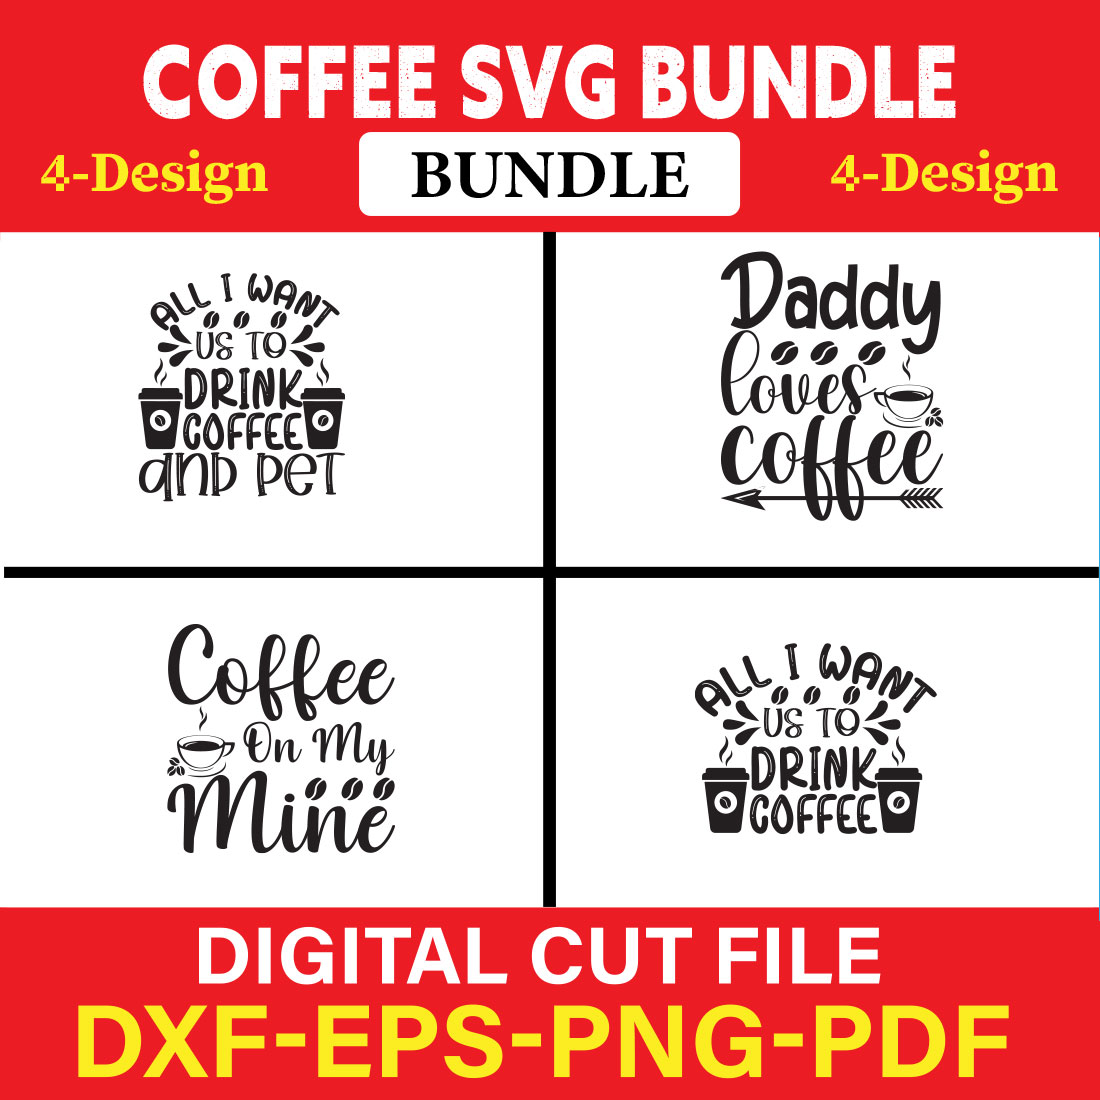 Coffee T-shirt Design Bundle Vol-8 cover image.